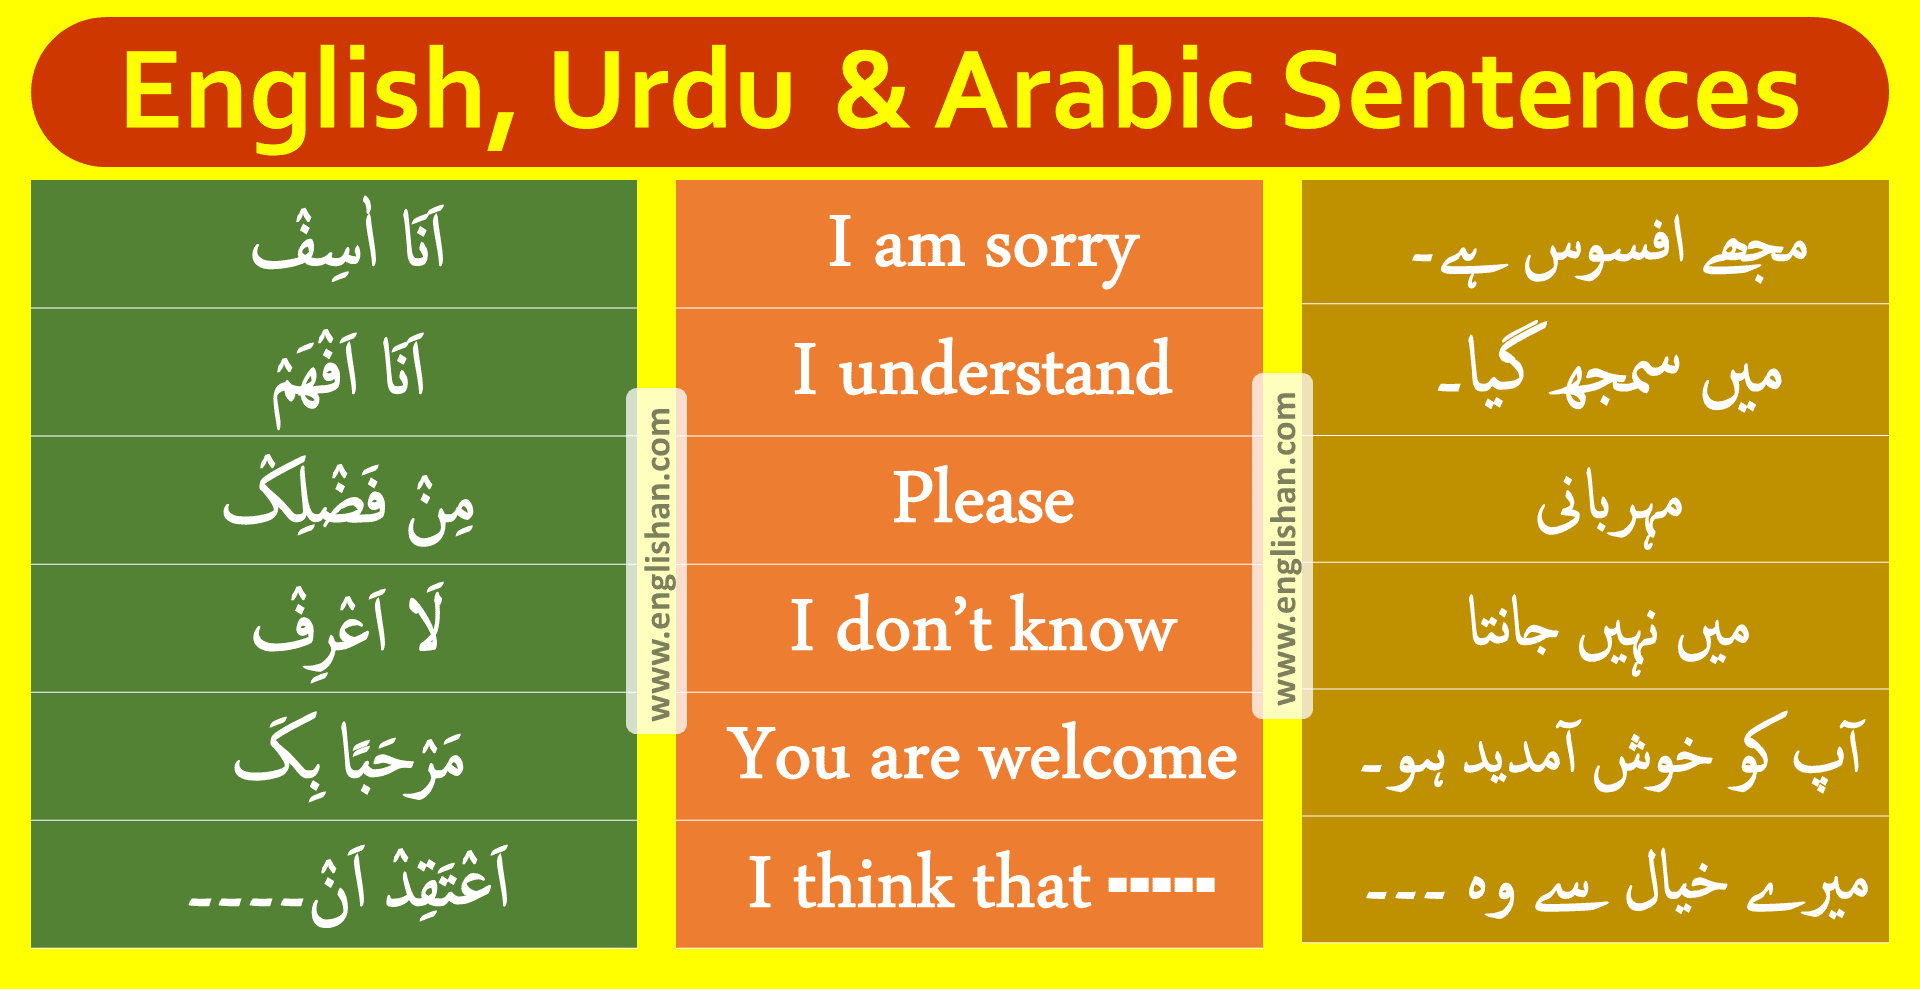 Arabic Conversation in English Free PDF English